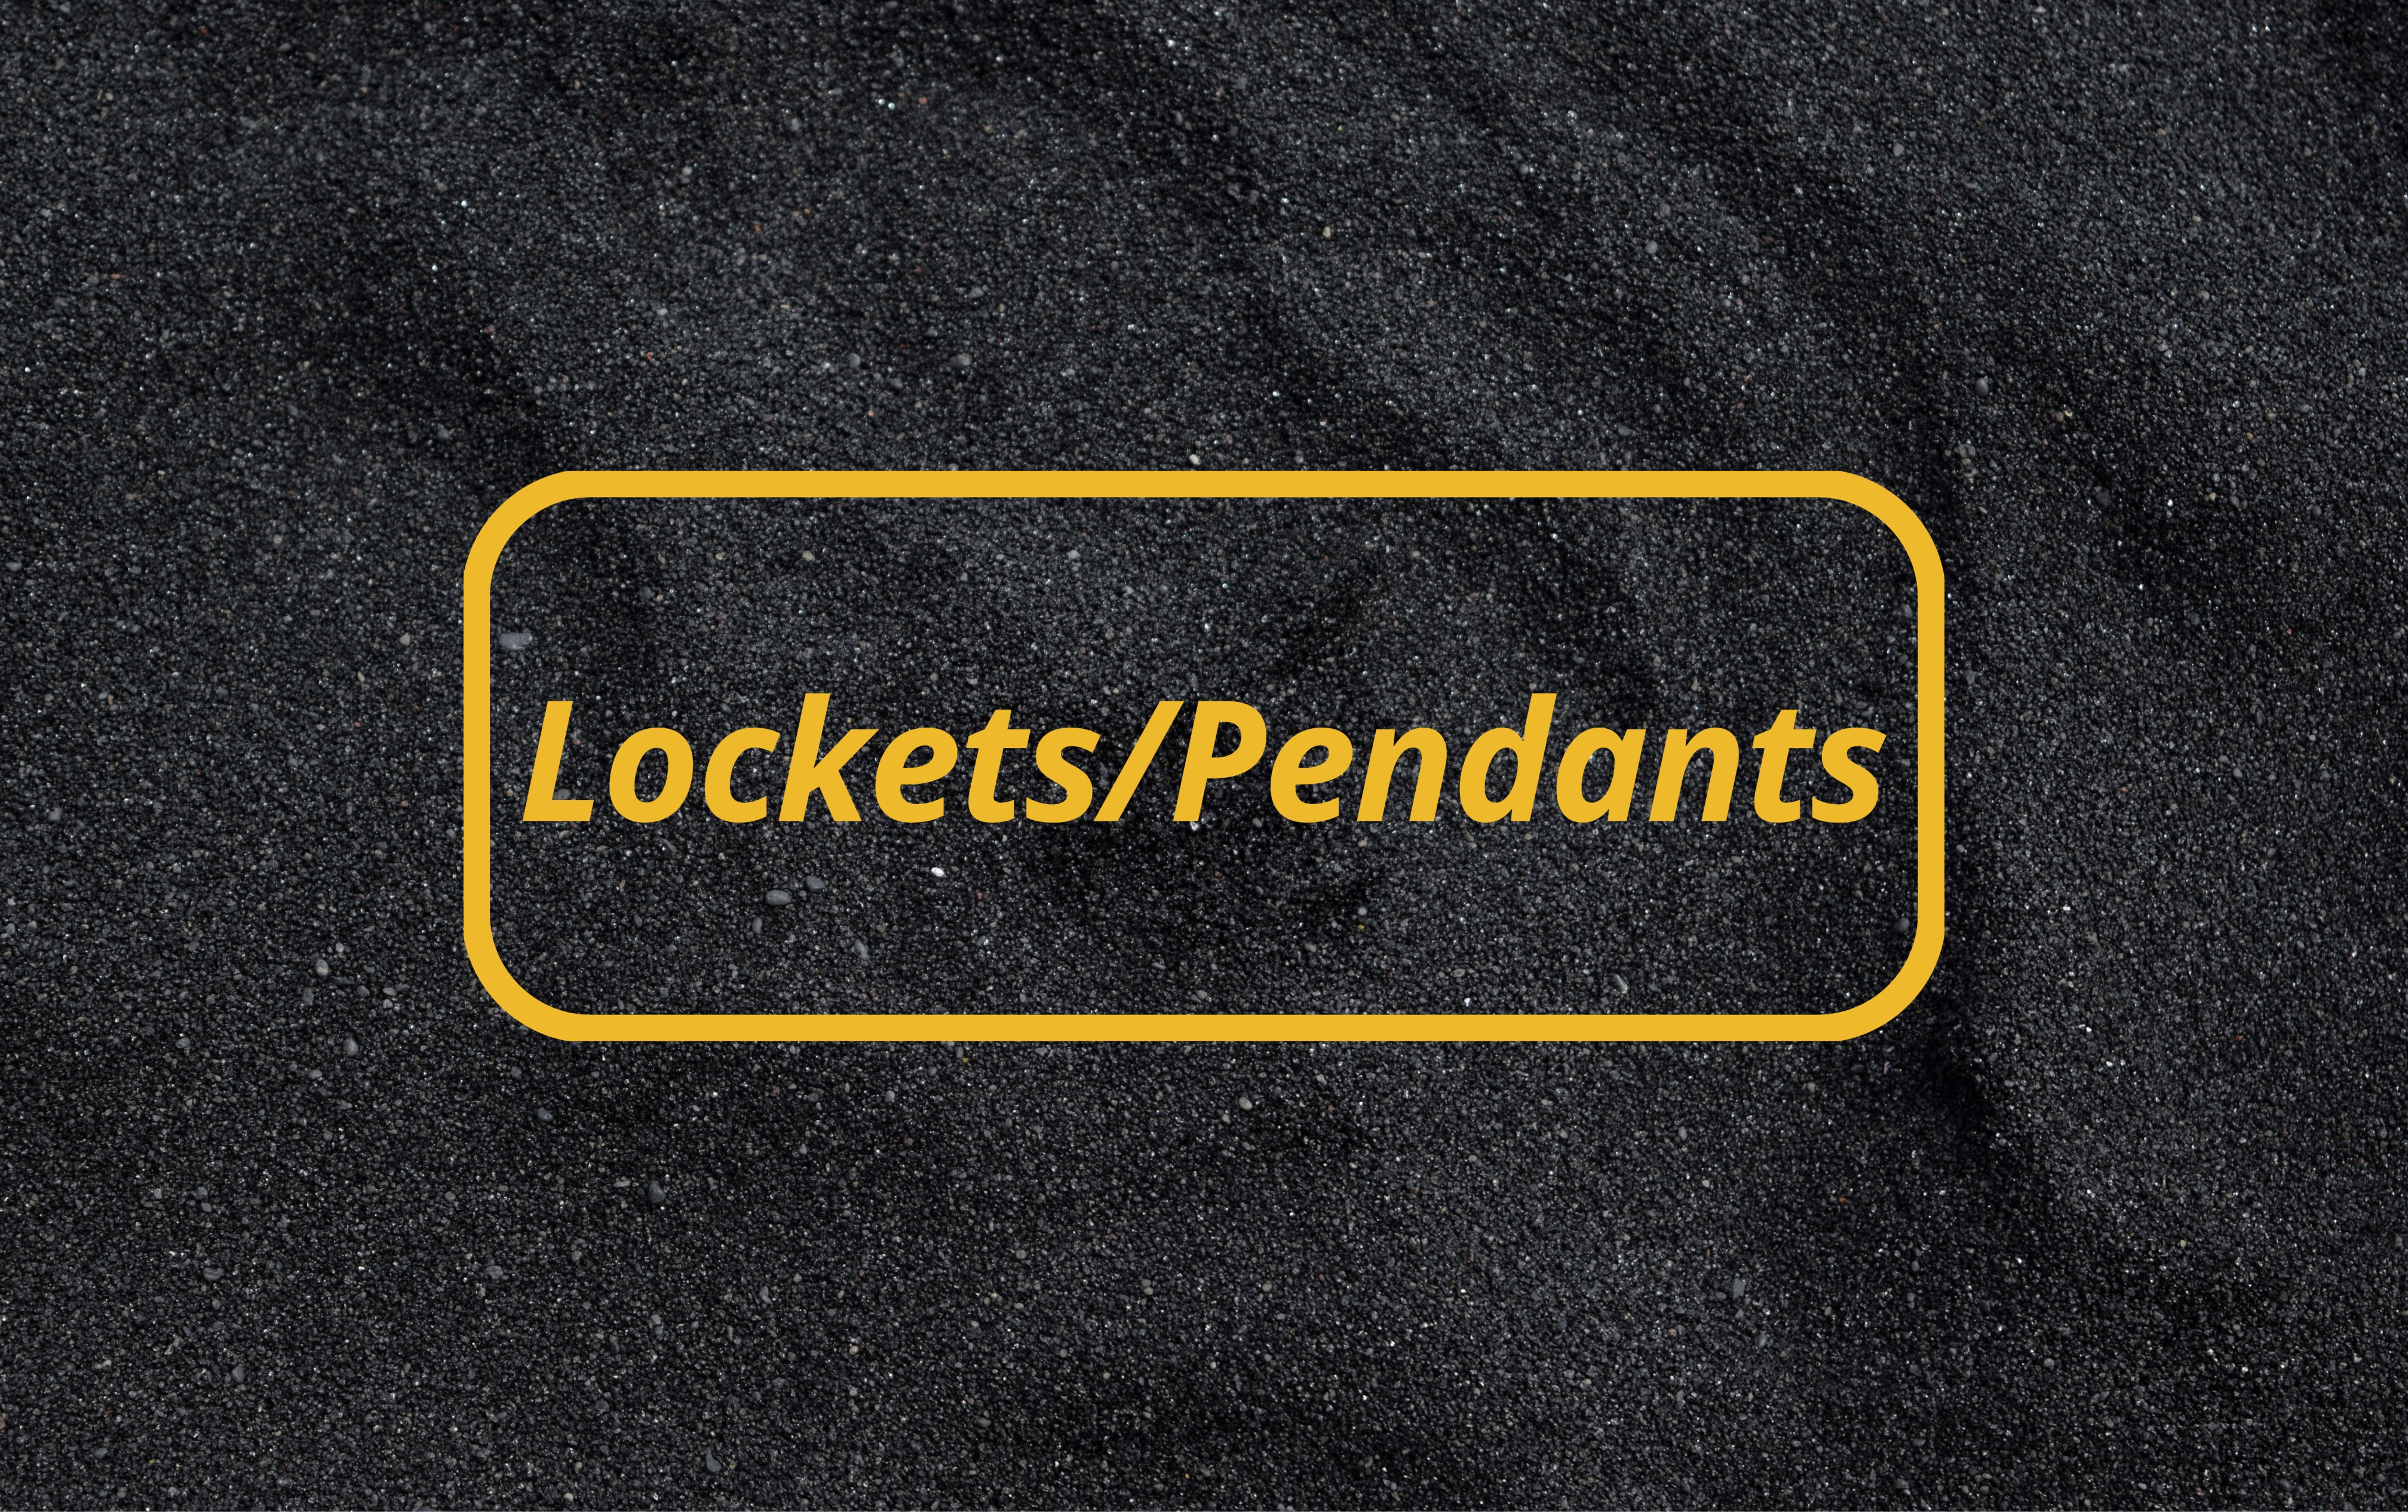 Lockets/Pendants